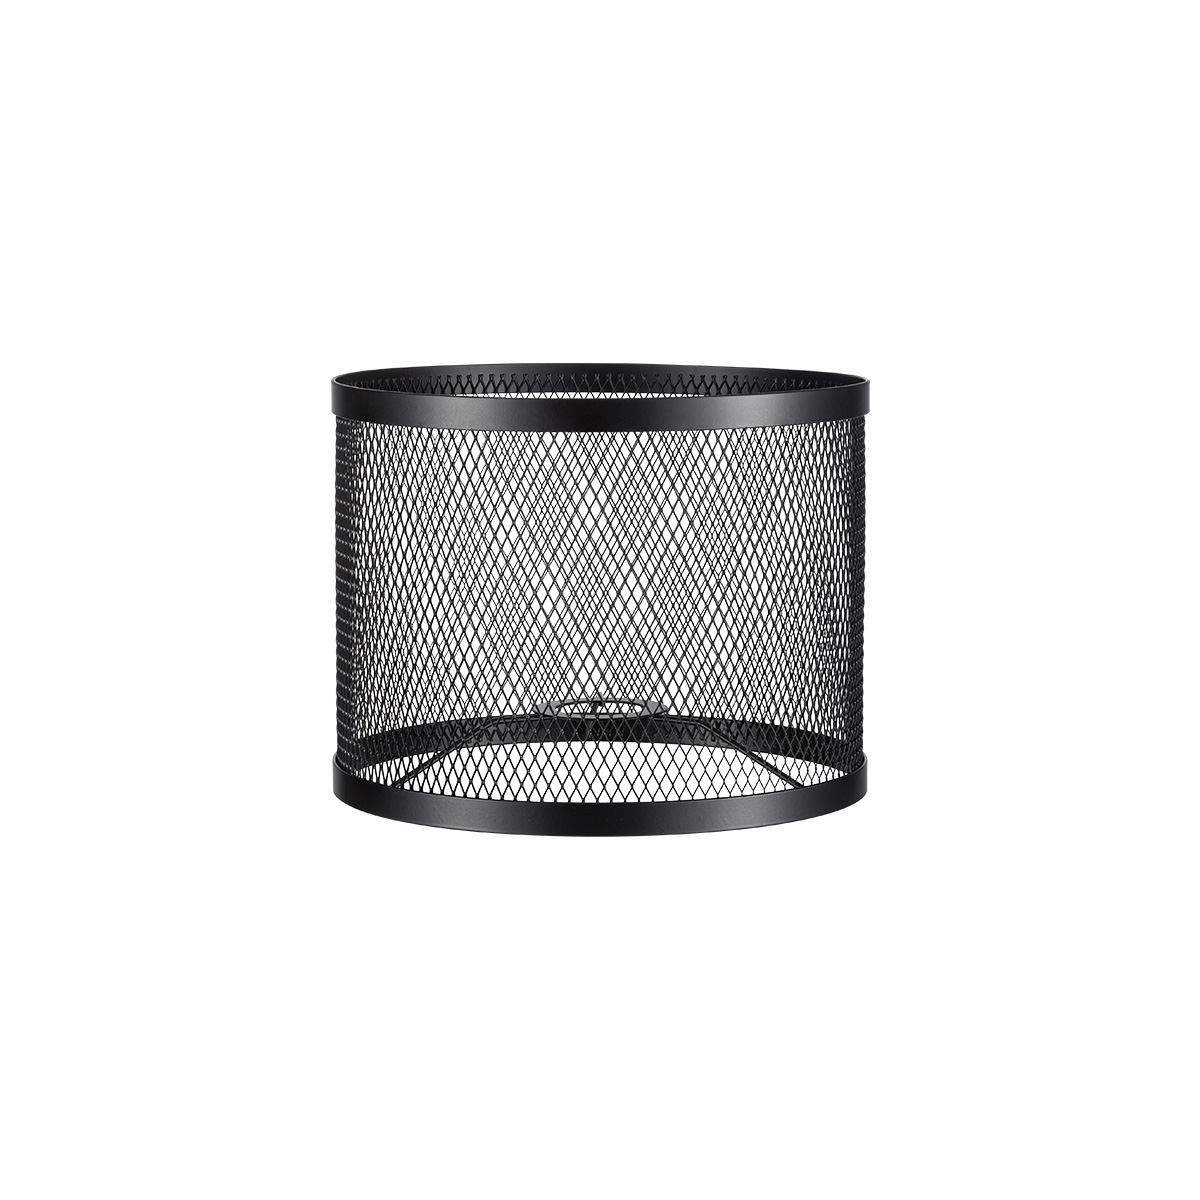 Tangla lighting - TLS7646-25BK - Decorative Lampshade - metal wire mesh in black - industrial black - Φ25cm - E27